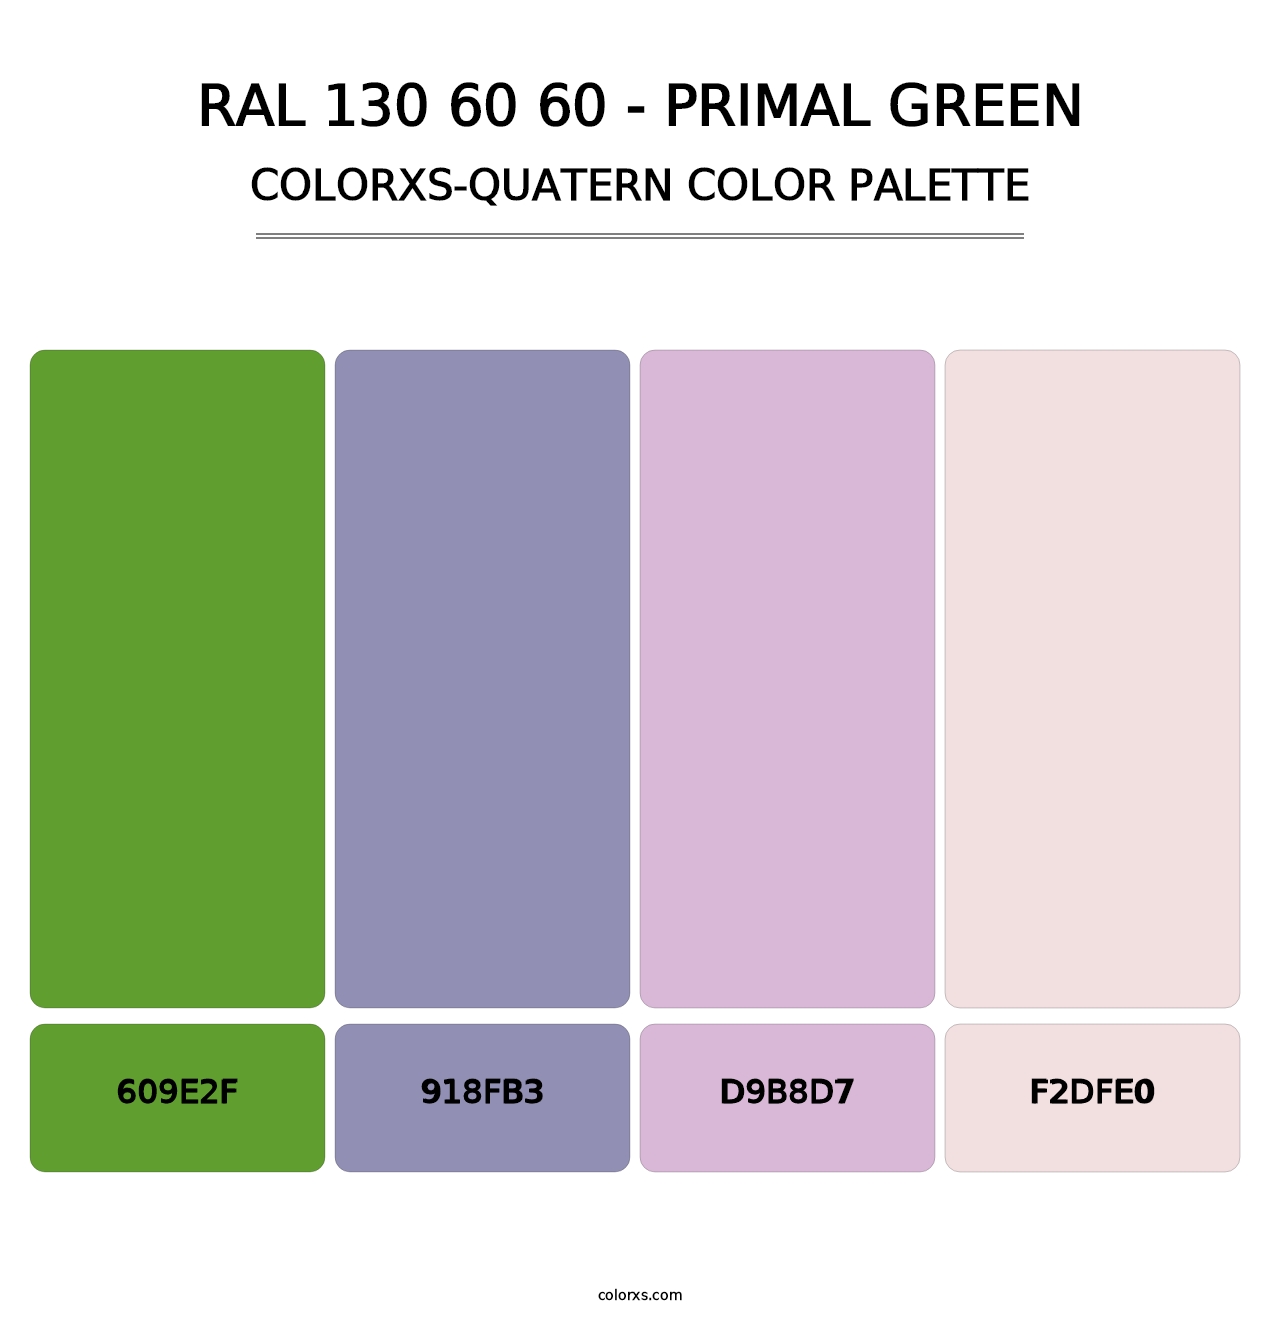 RAL 130 60 60 - Primal Green - Colorxs Quatern Palette